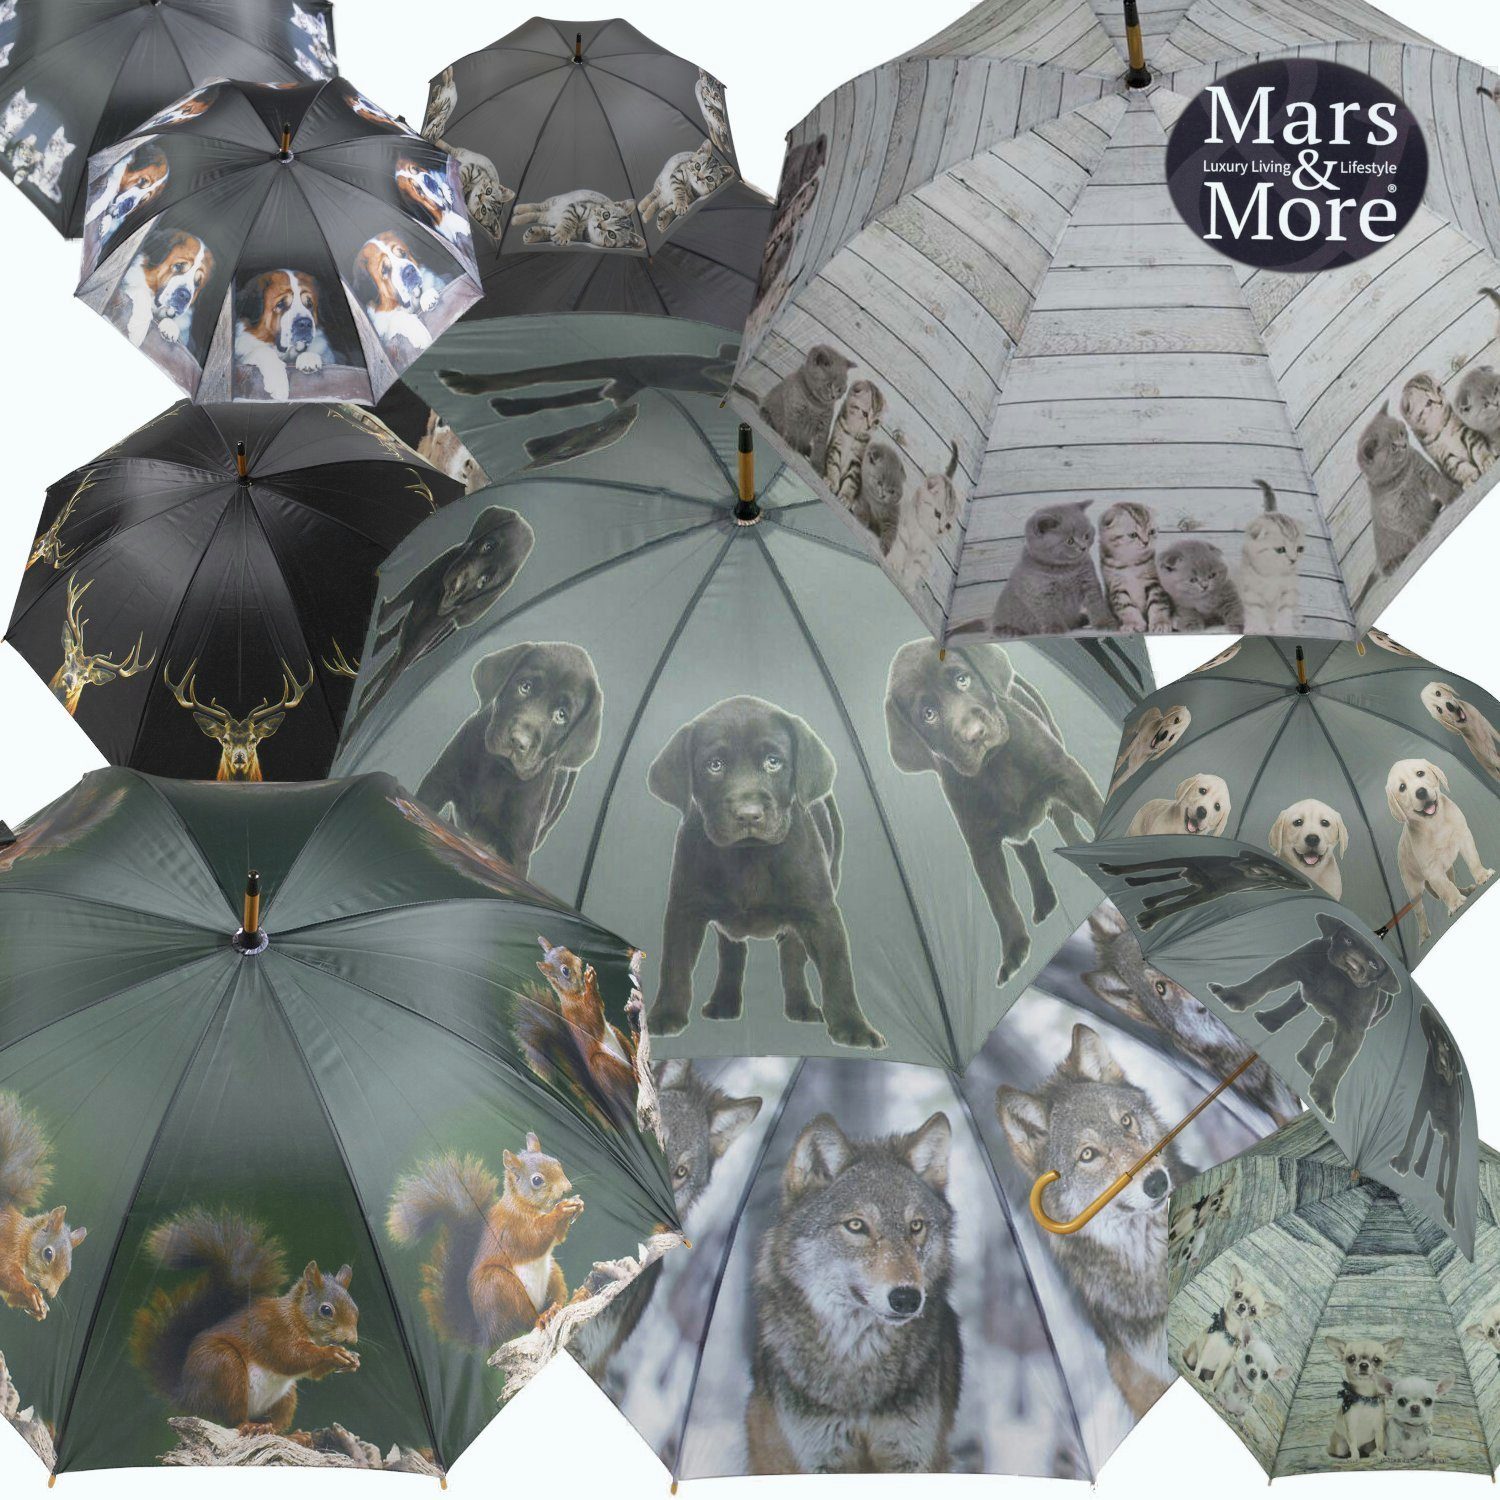 Natur Stockregenschirm Stock- Eichhörnchen Mars Mars & More & More Regenschirm